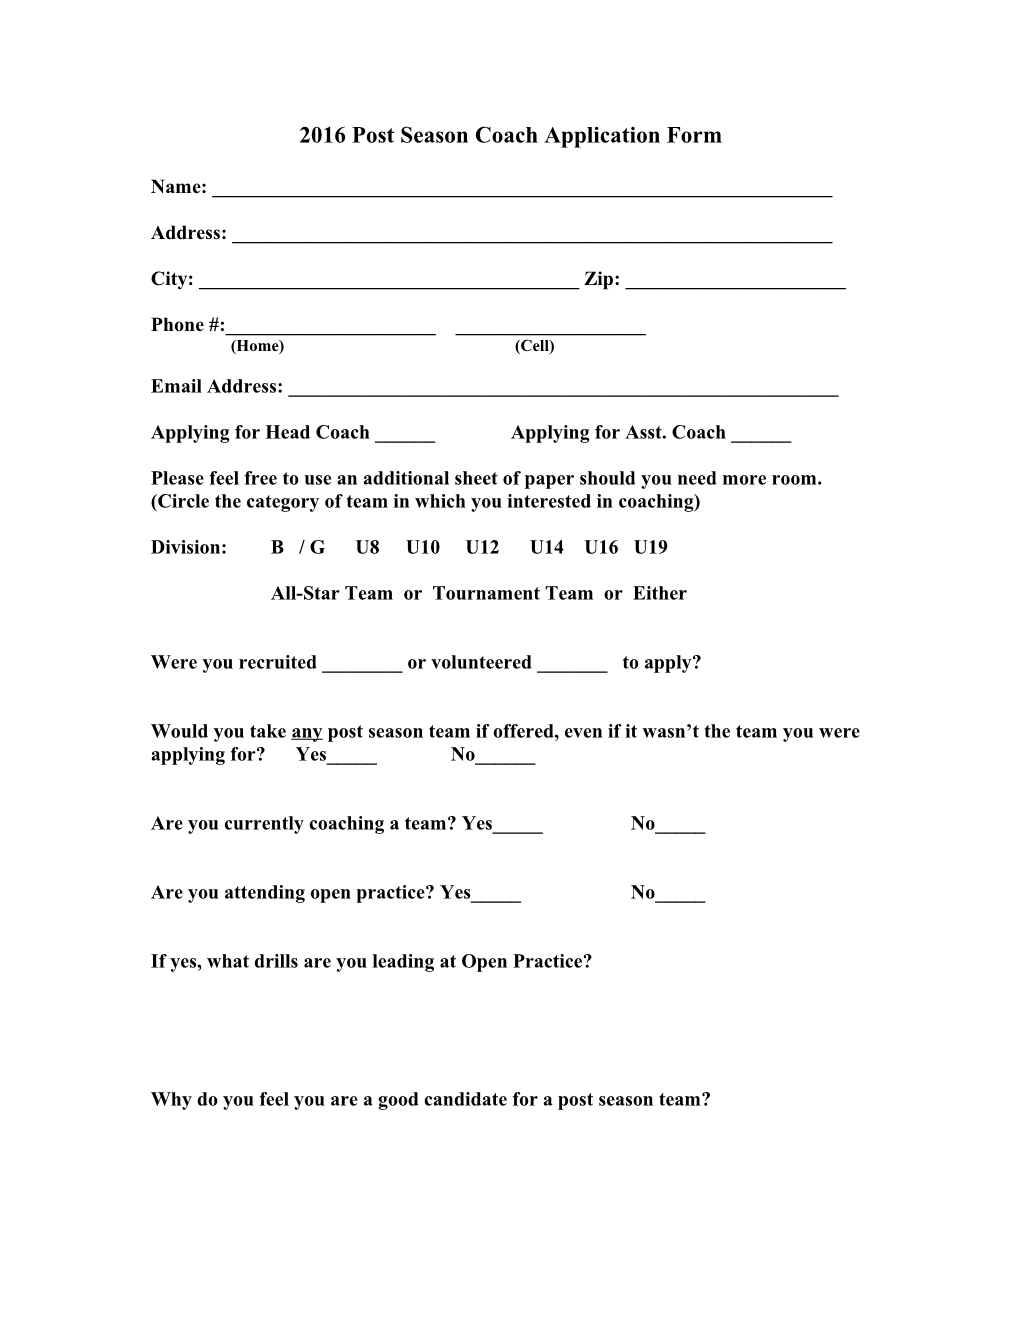 All Star Coach Application Form